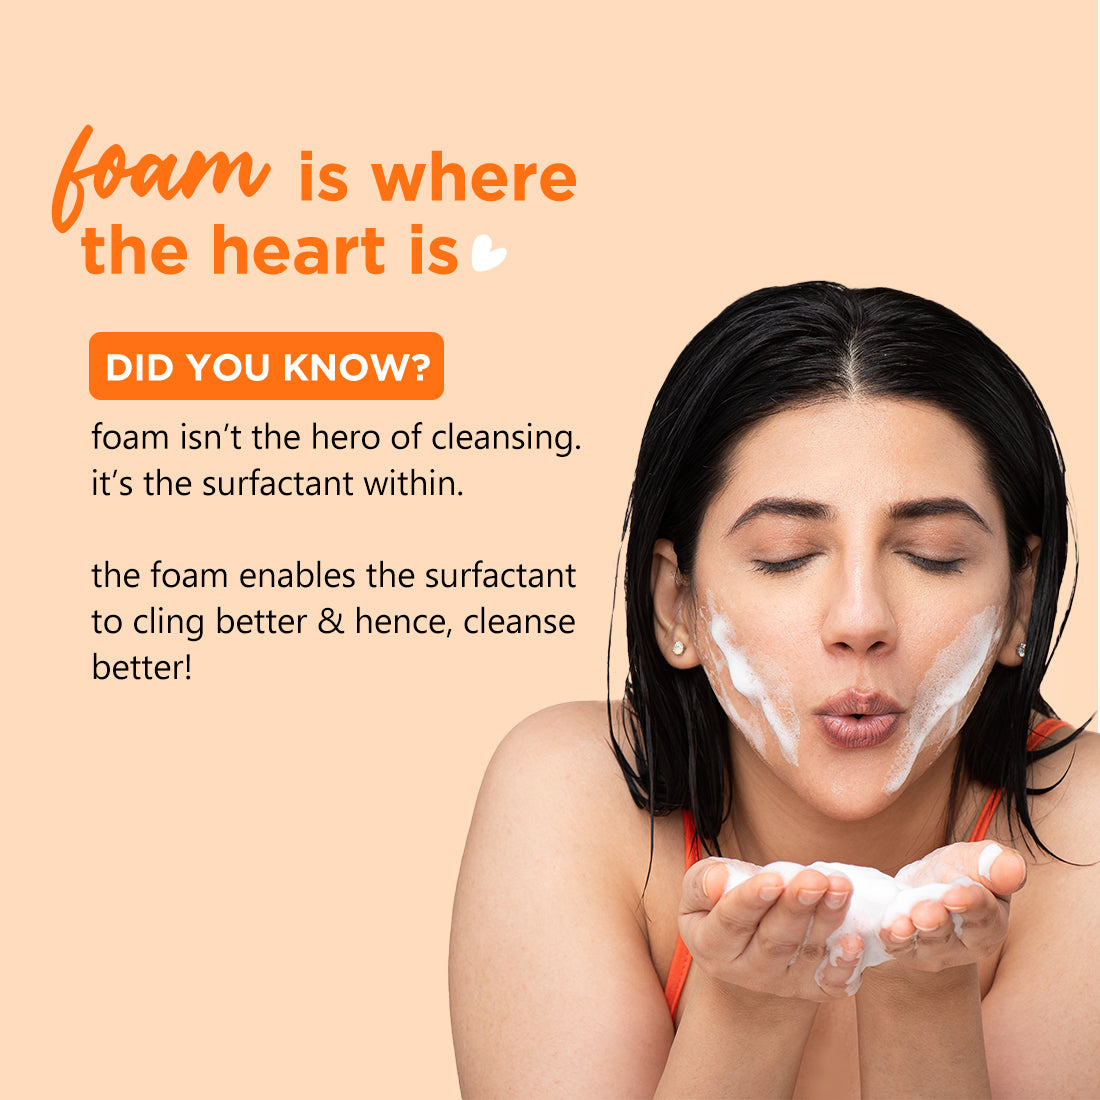 Plum Vitamin C Foaming Face Wash with Mandarin (110ml)